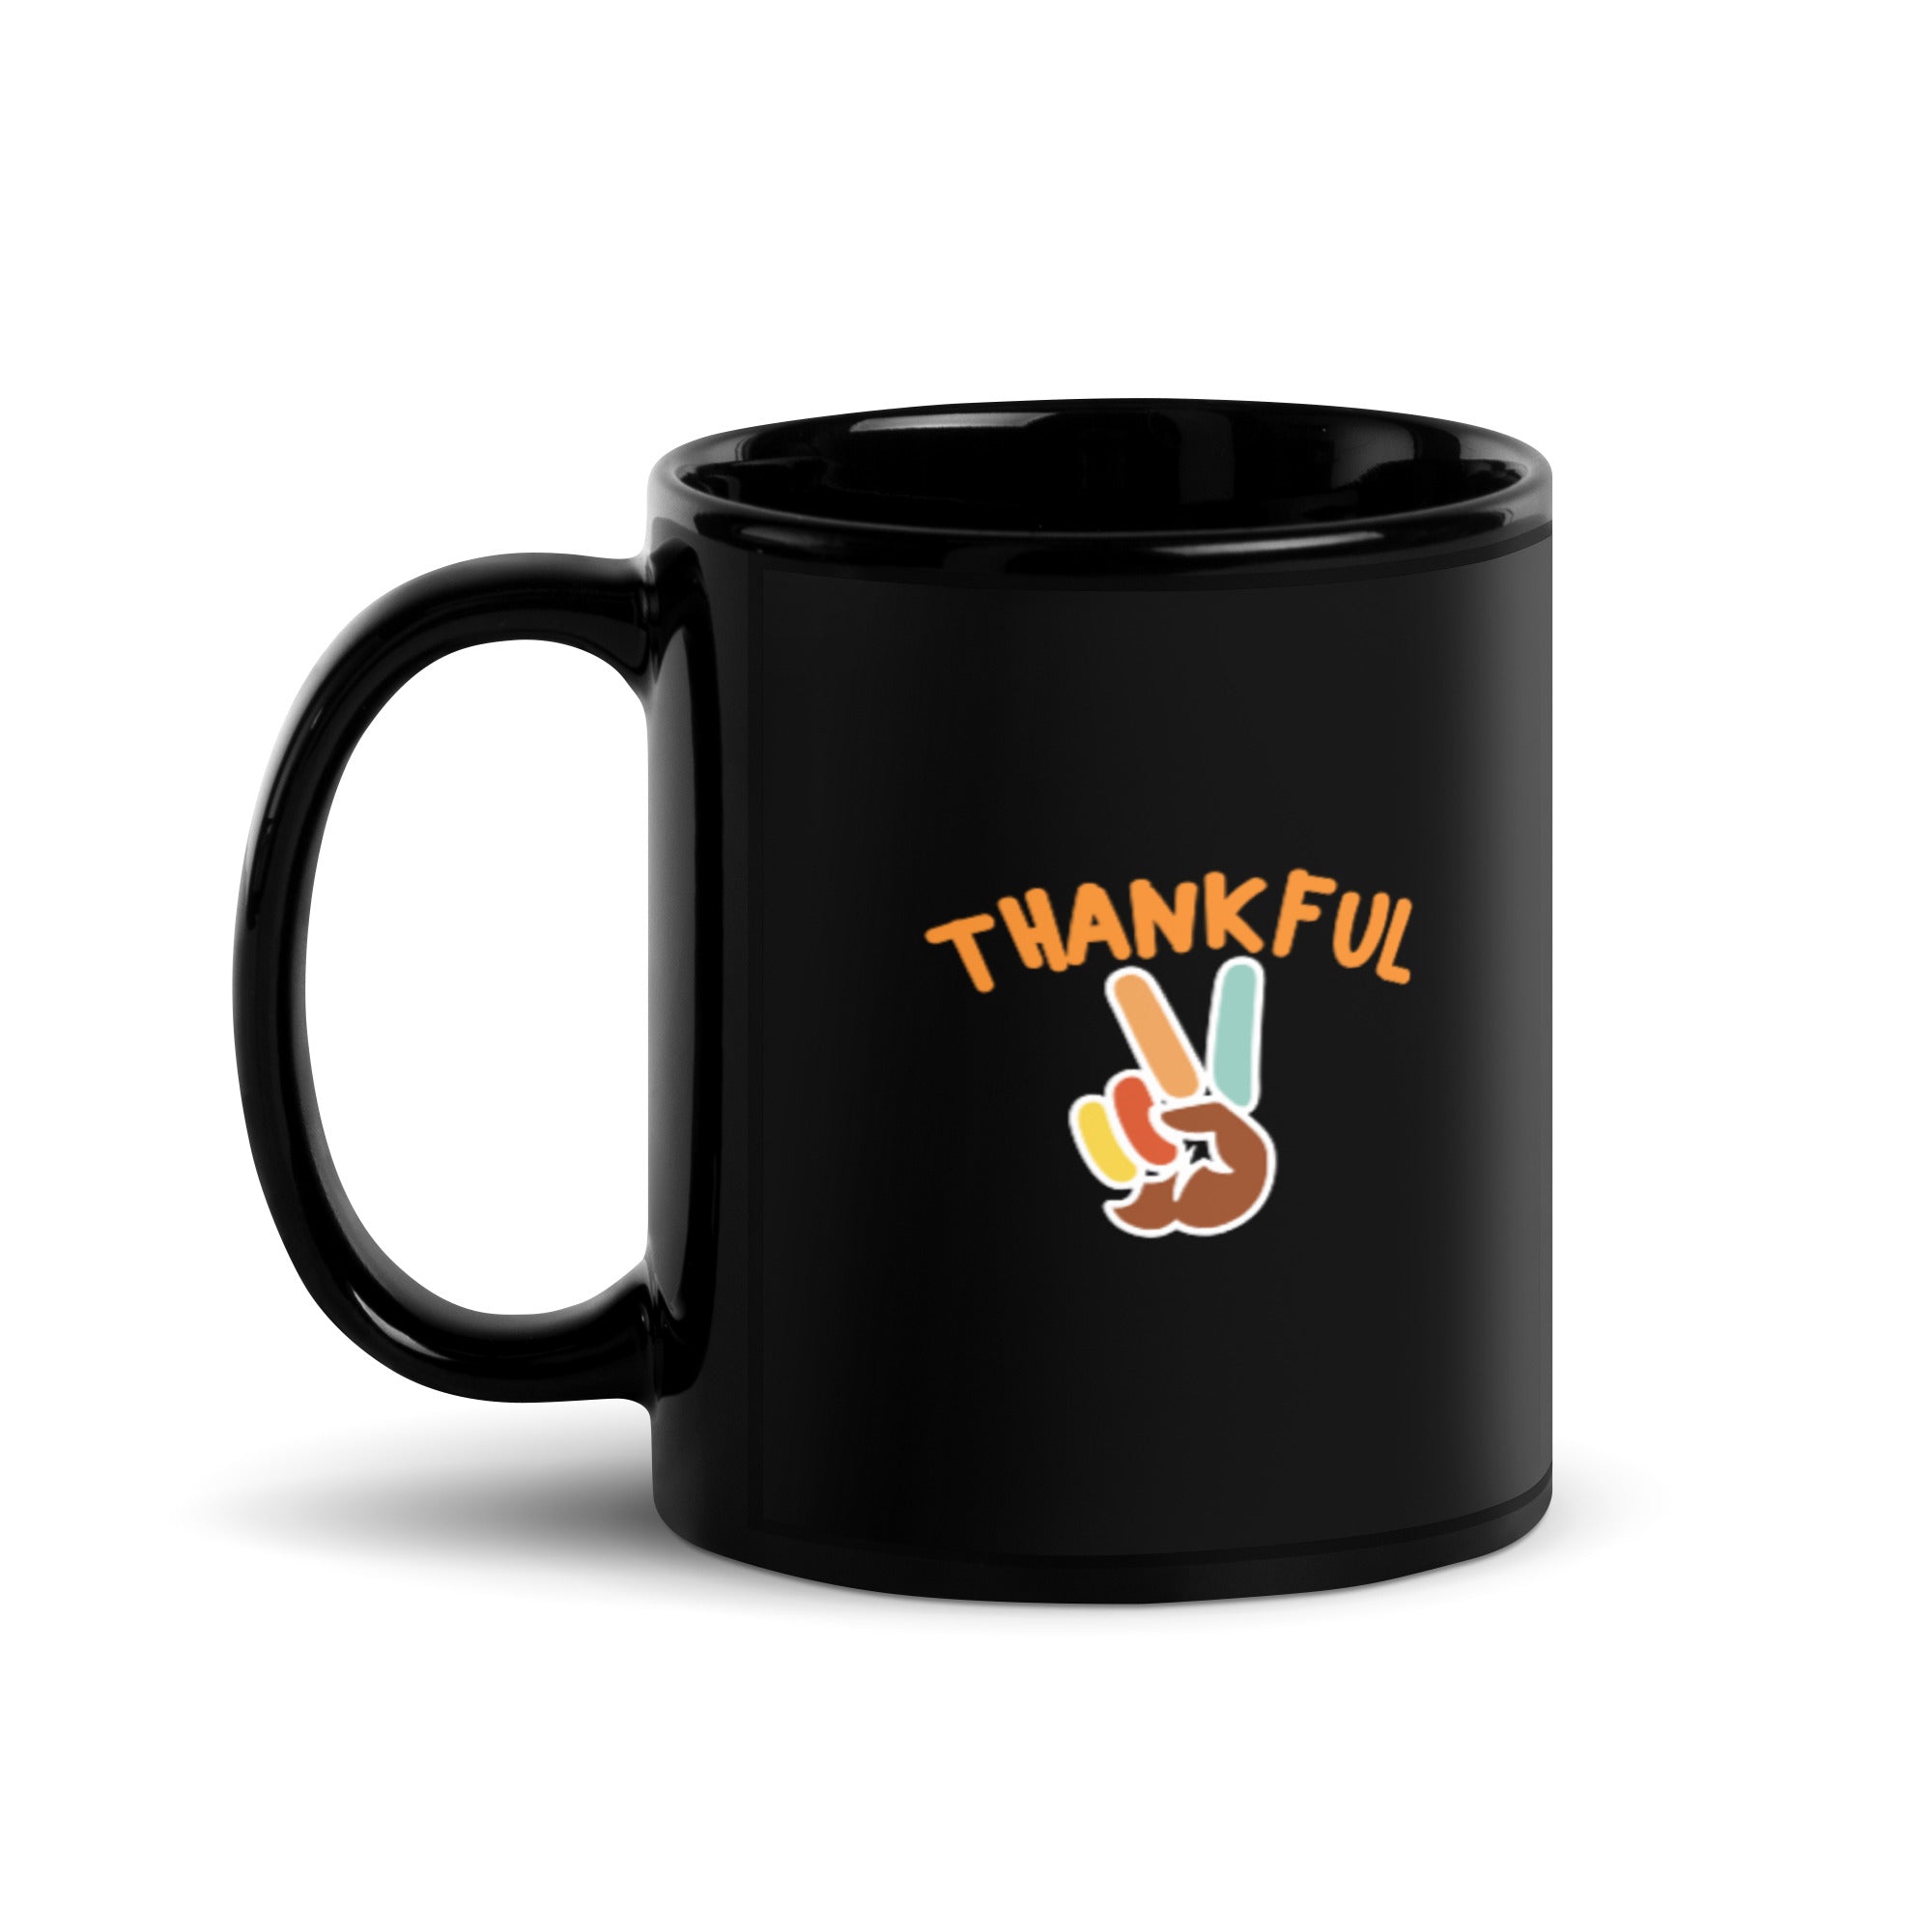 Thankful - Black Glossy Mug